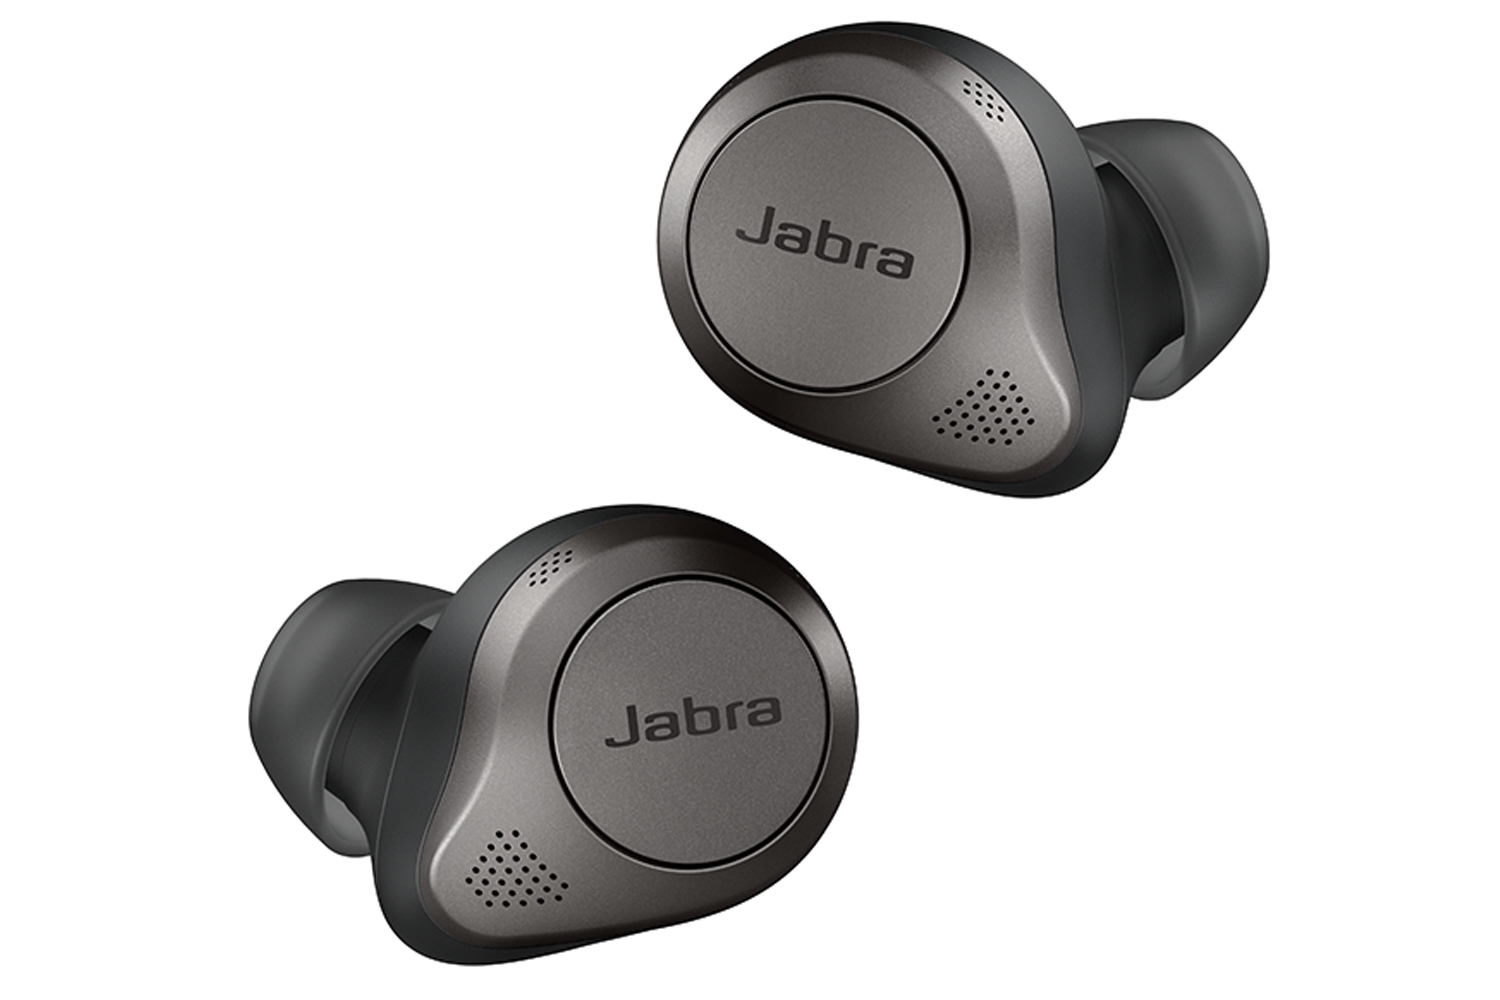 jabra headset playstation 4